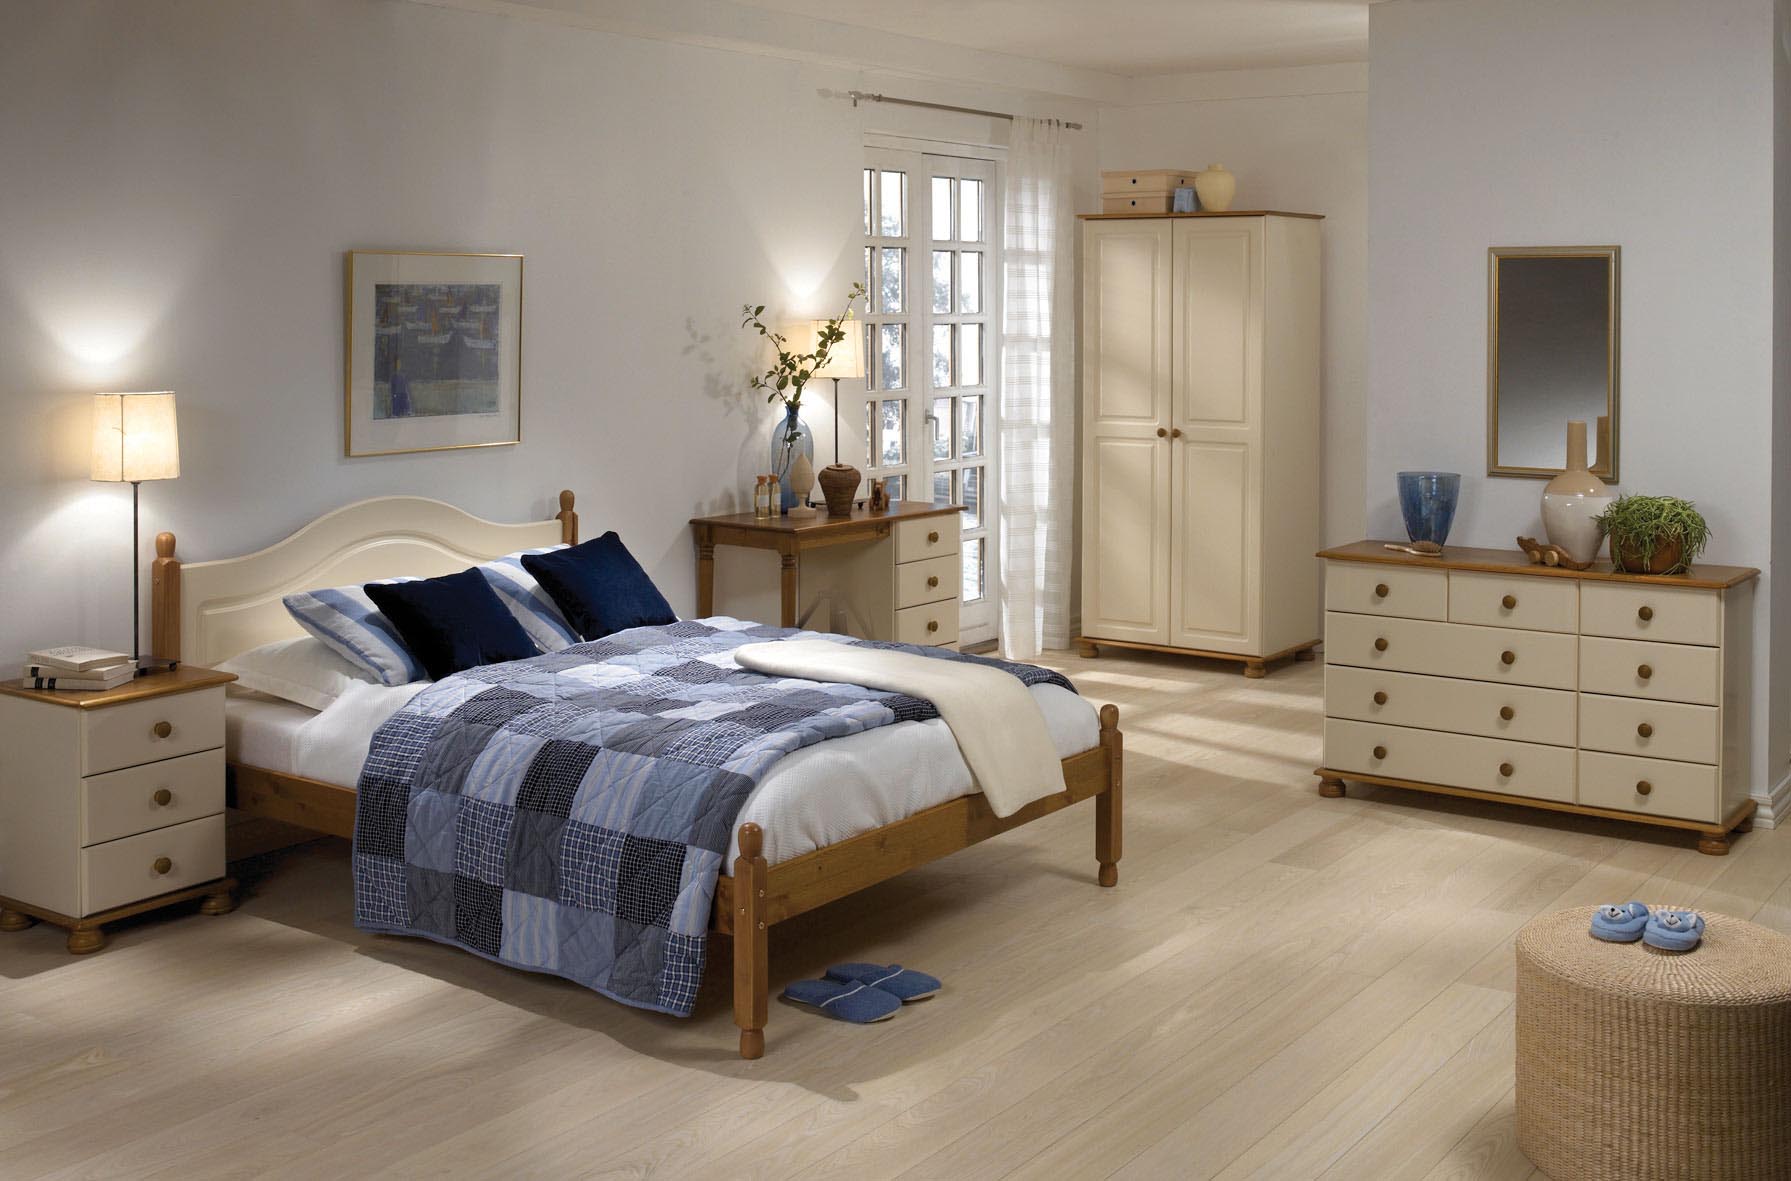 Painted Pine Bedroom Furniture